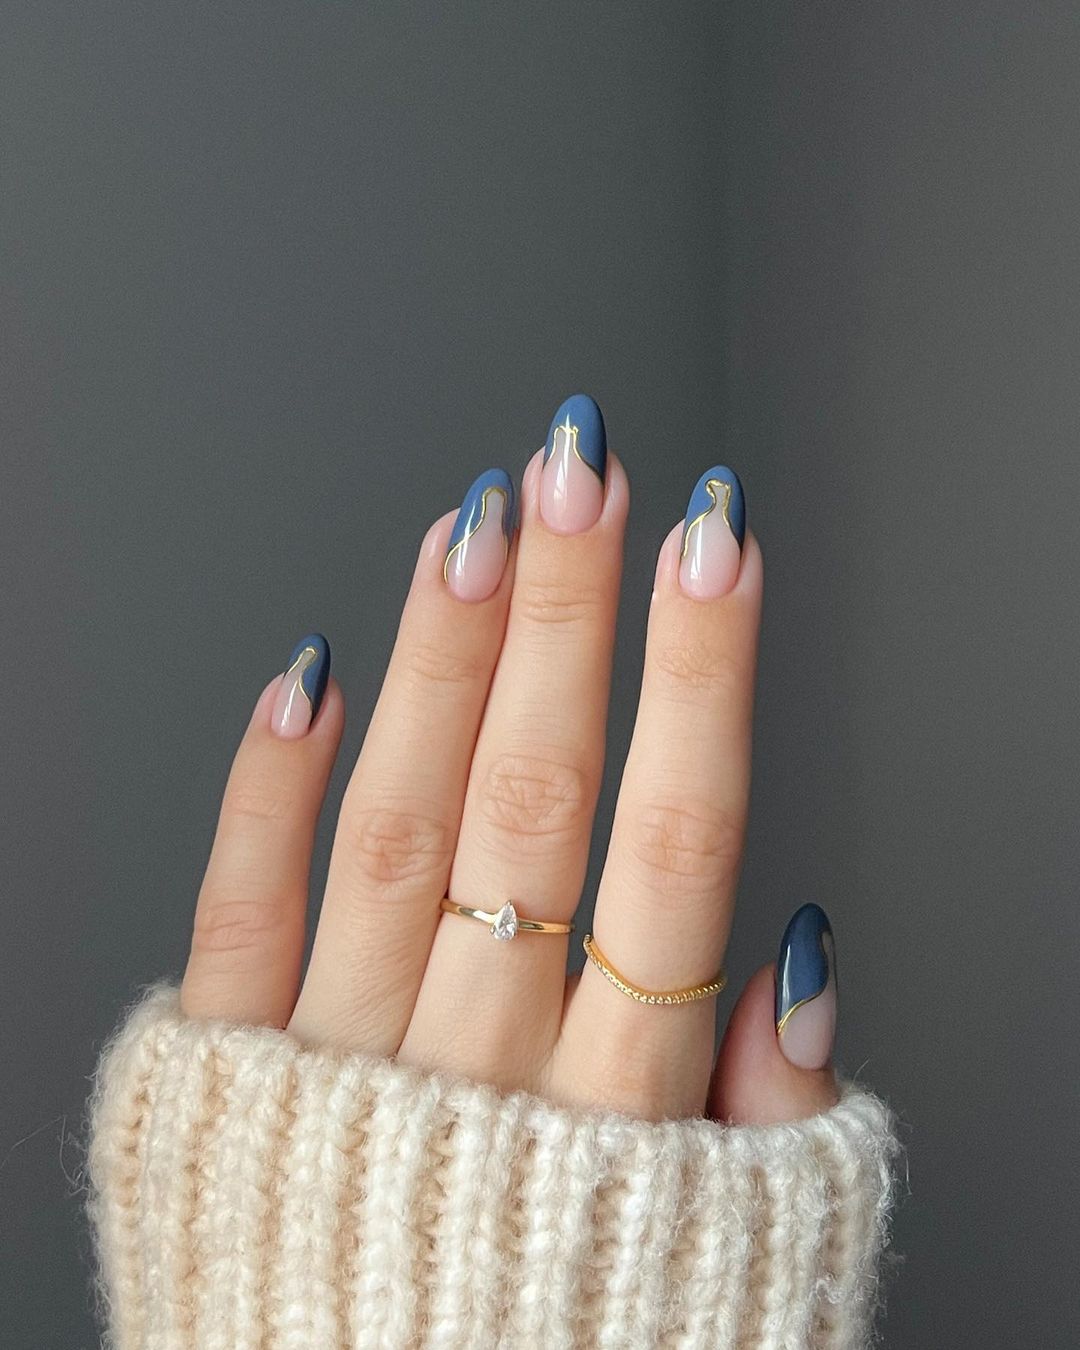 Blue Silver Christmas Nails